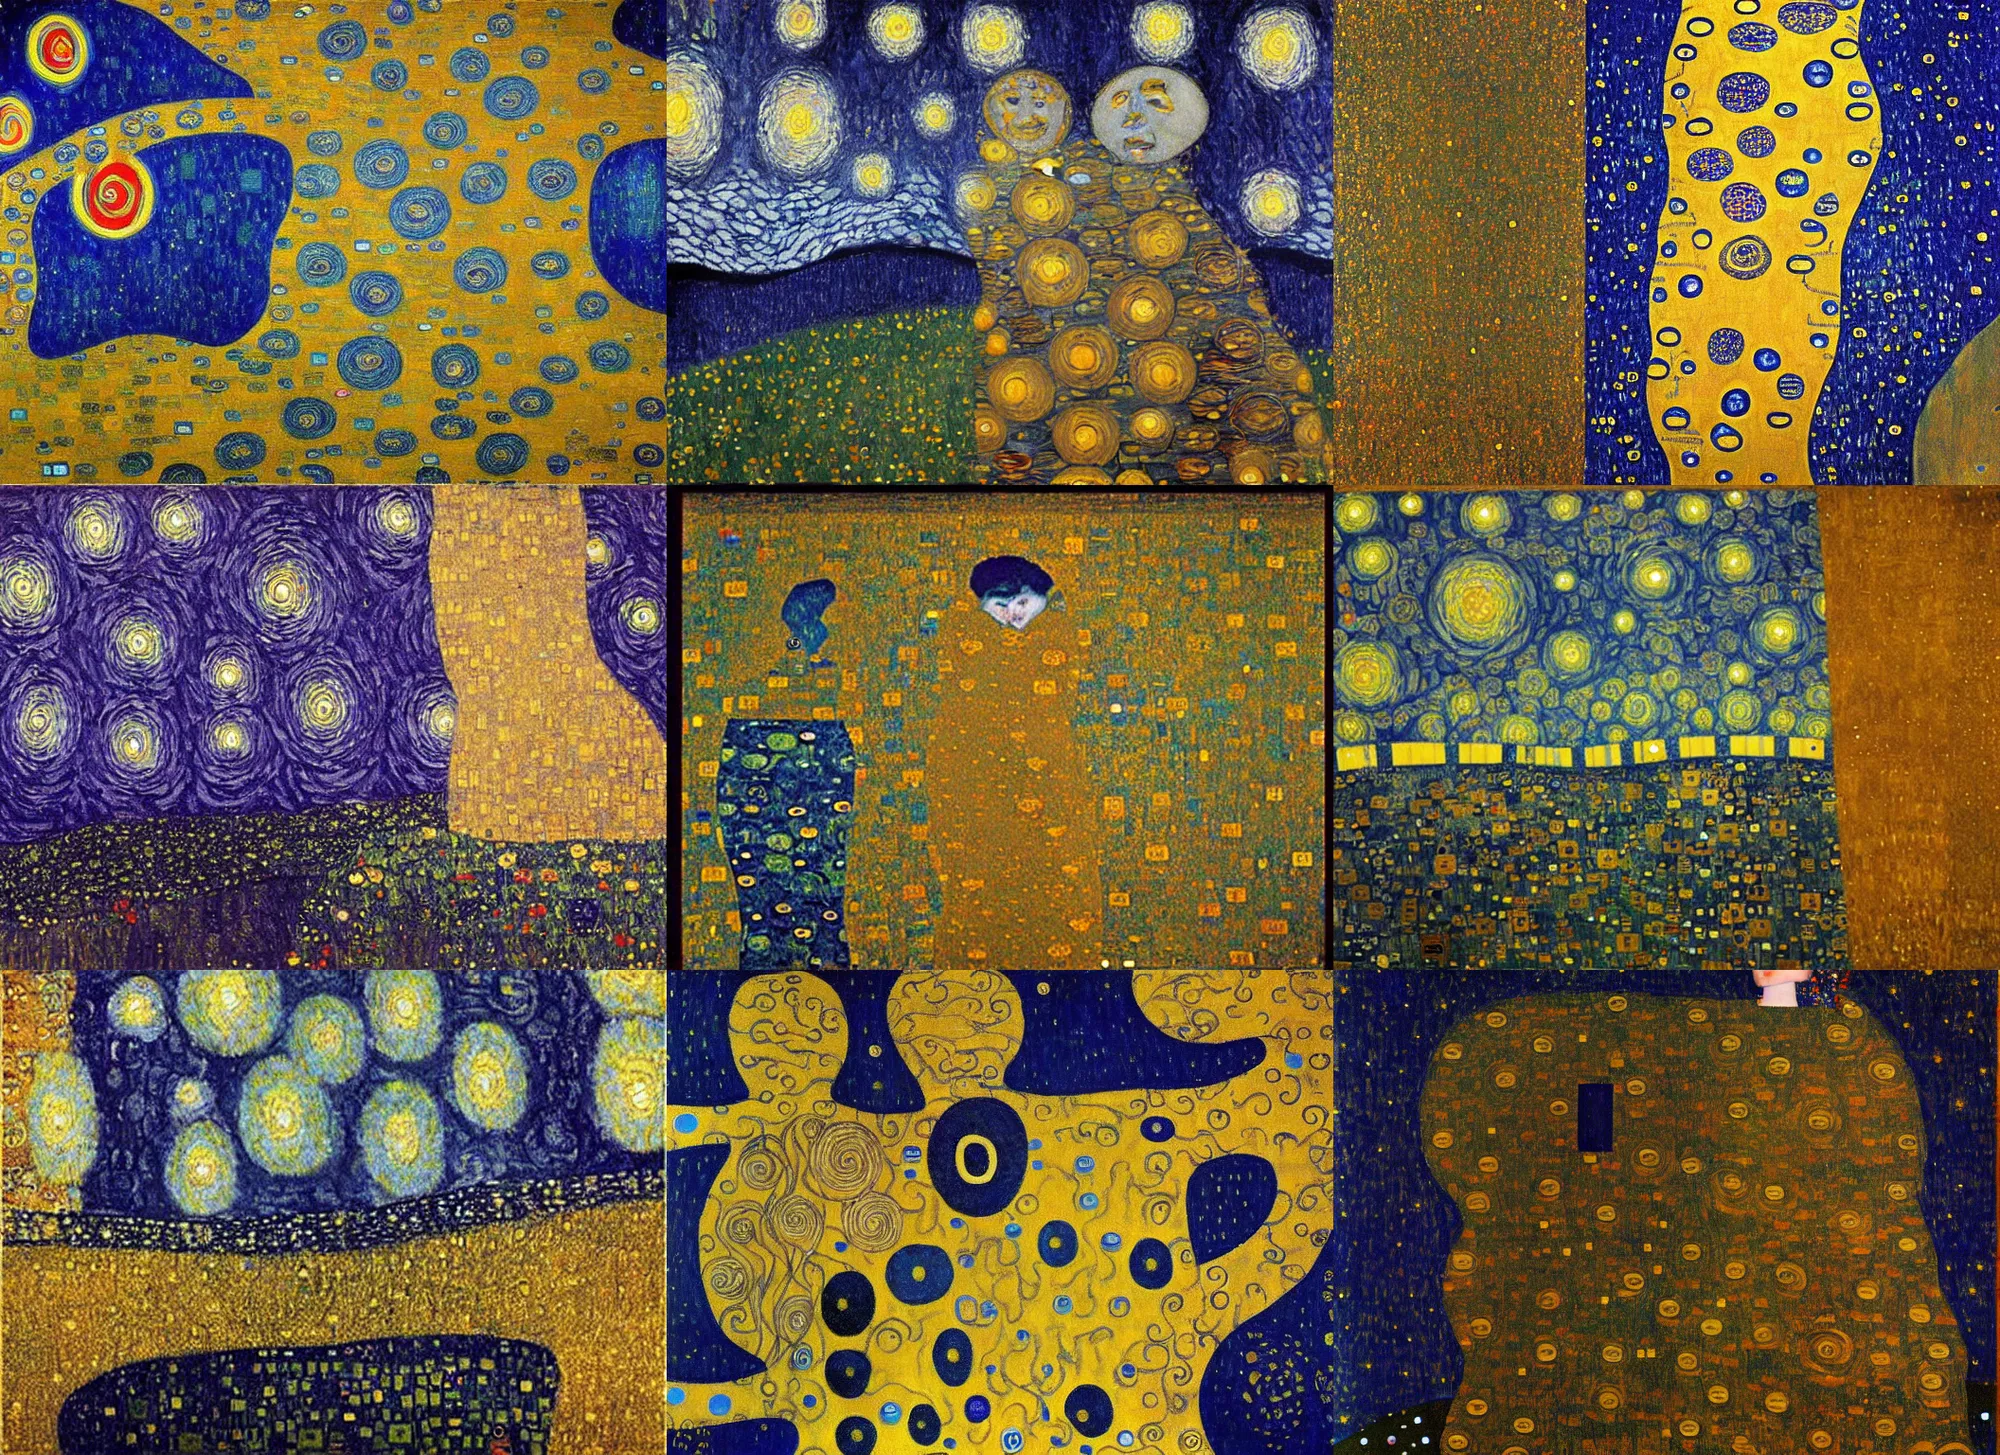 Prompt: Starry Night, painted by Gustav Klimt